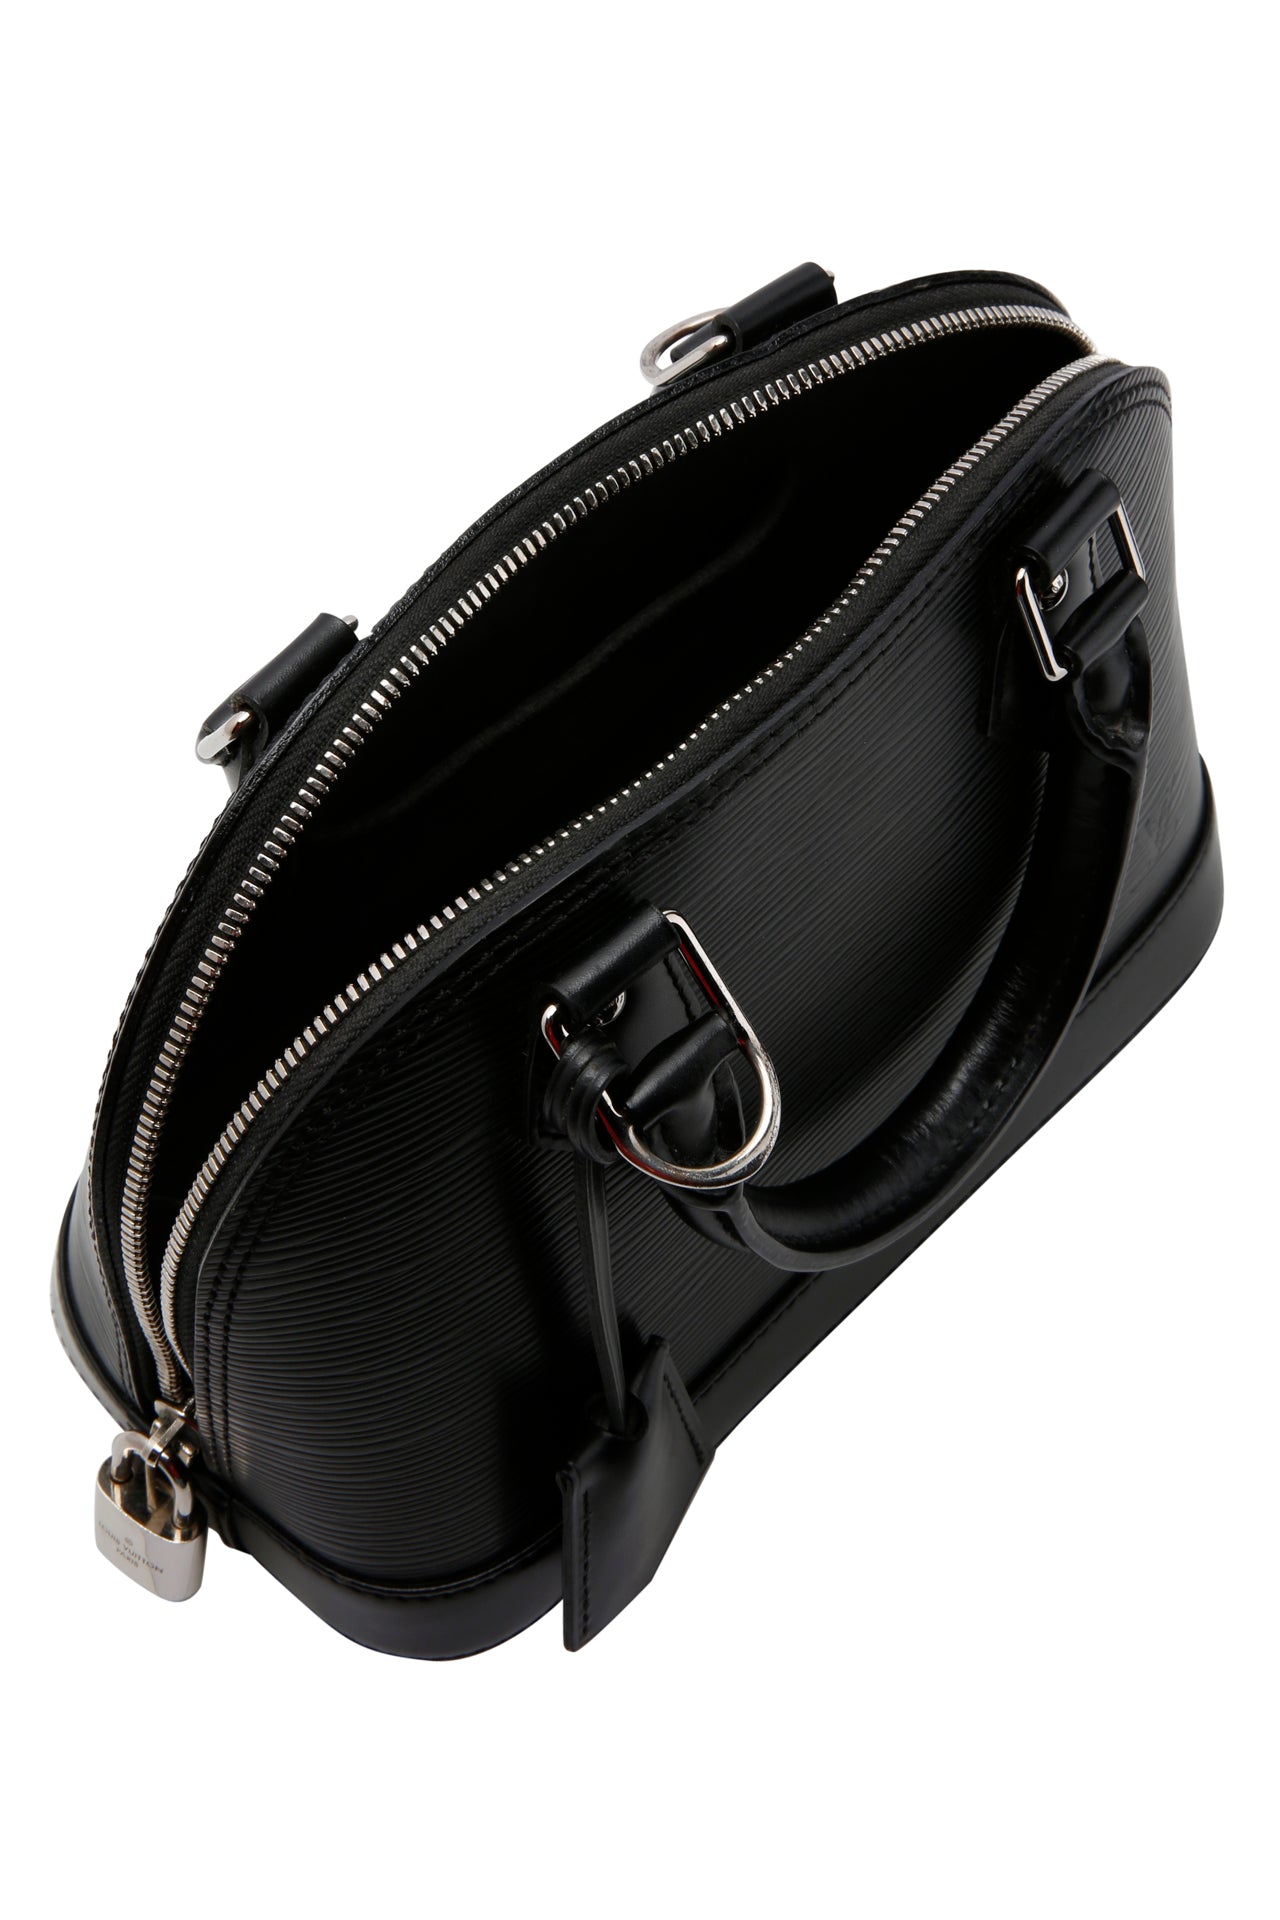 Louis Vuitton Epi Leather Alma BB Bag Black